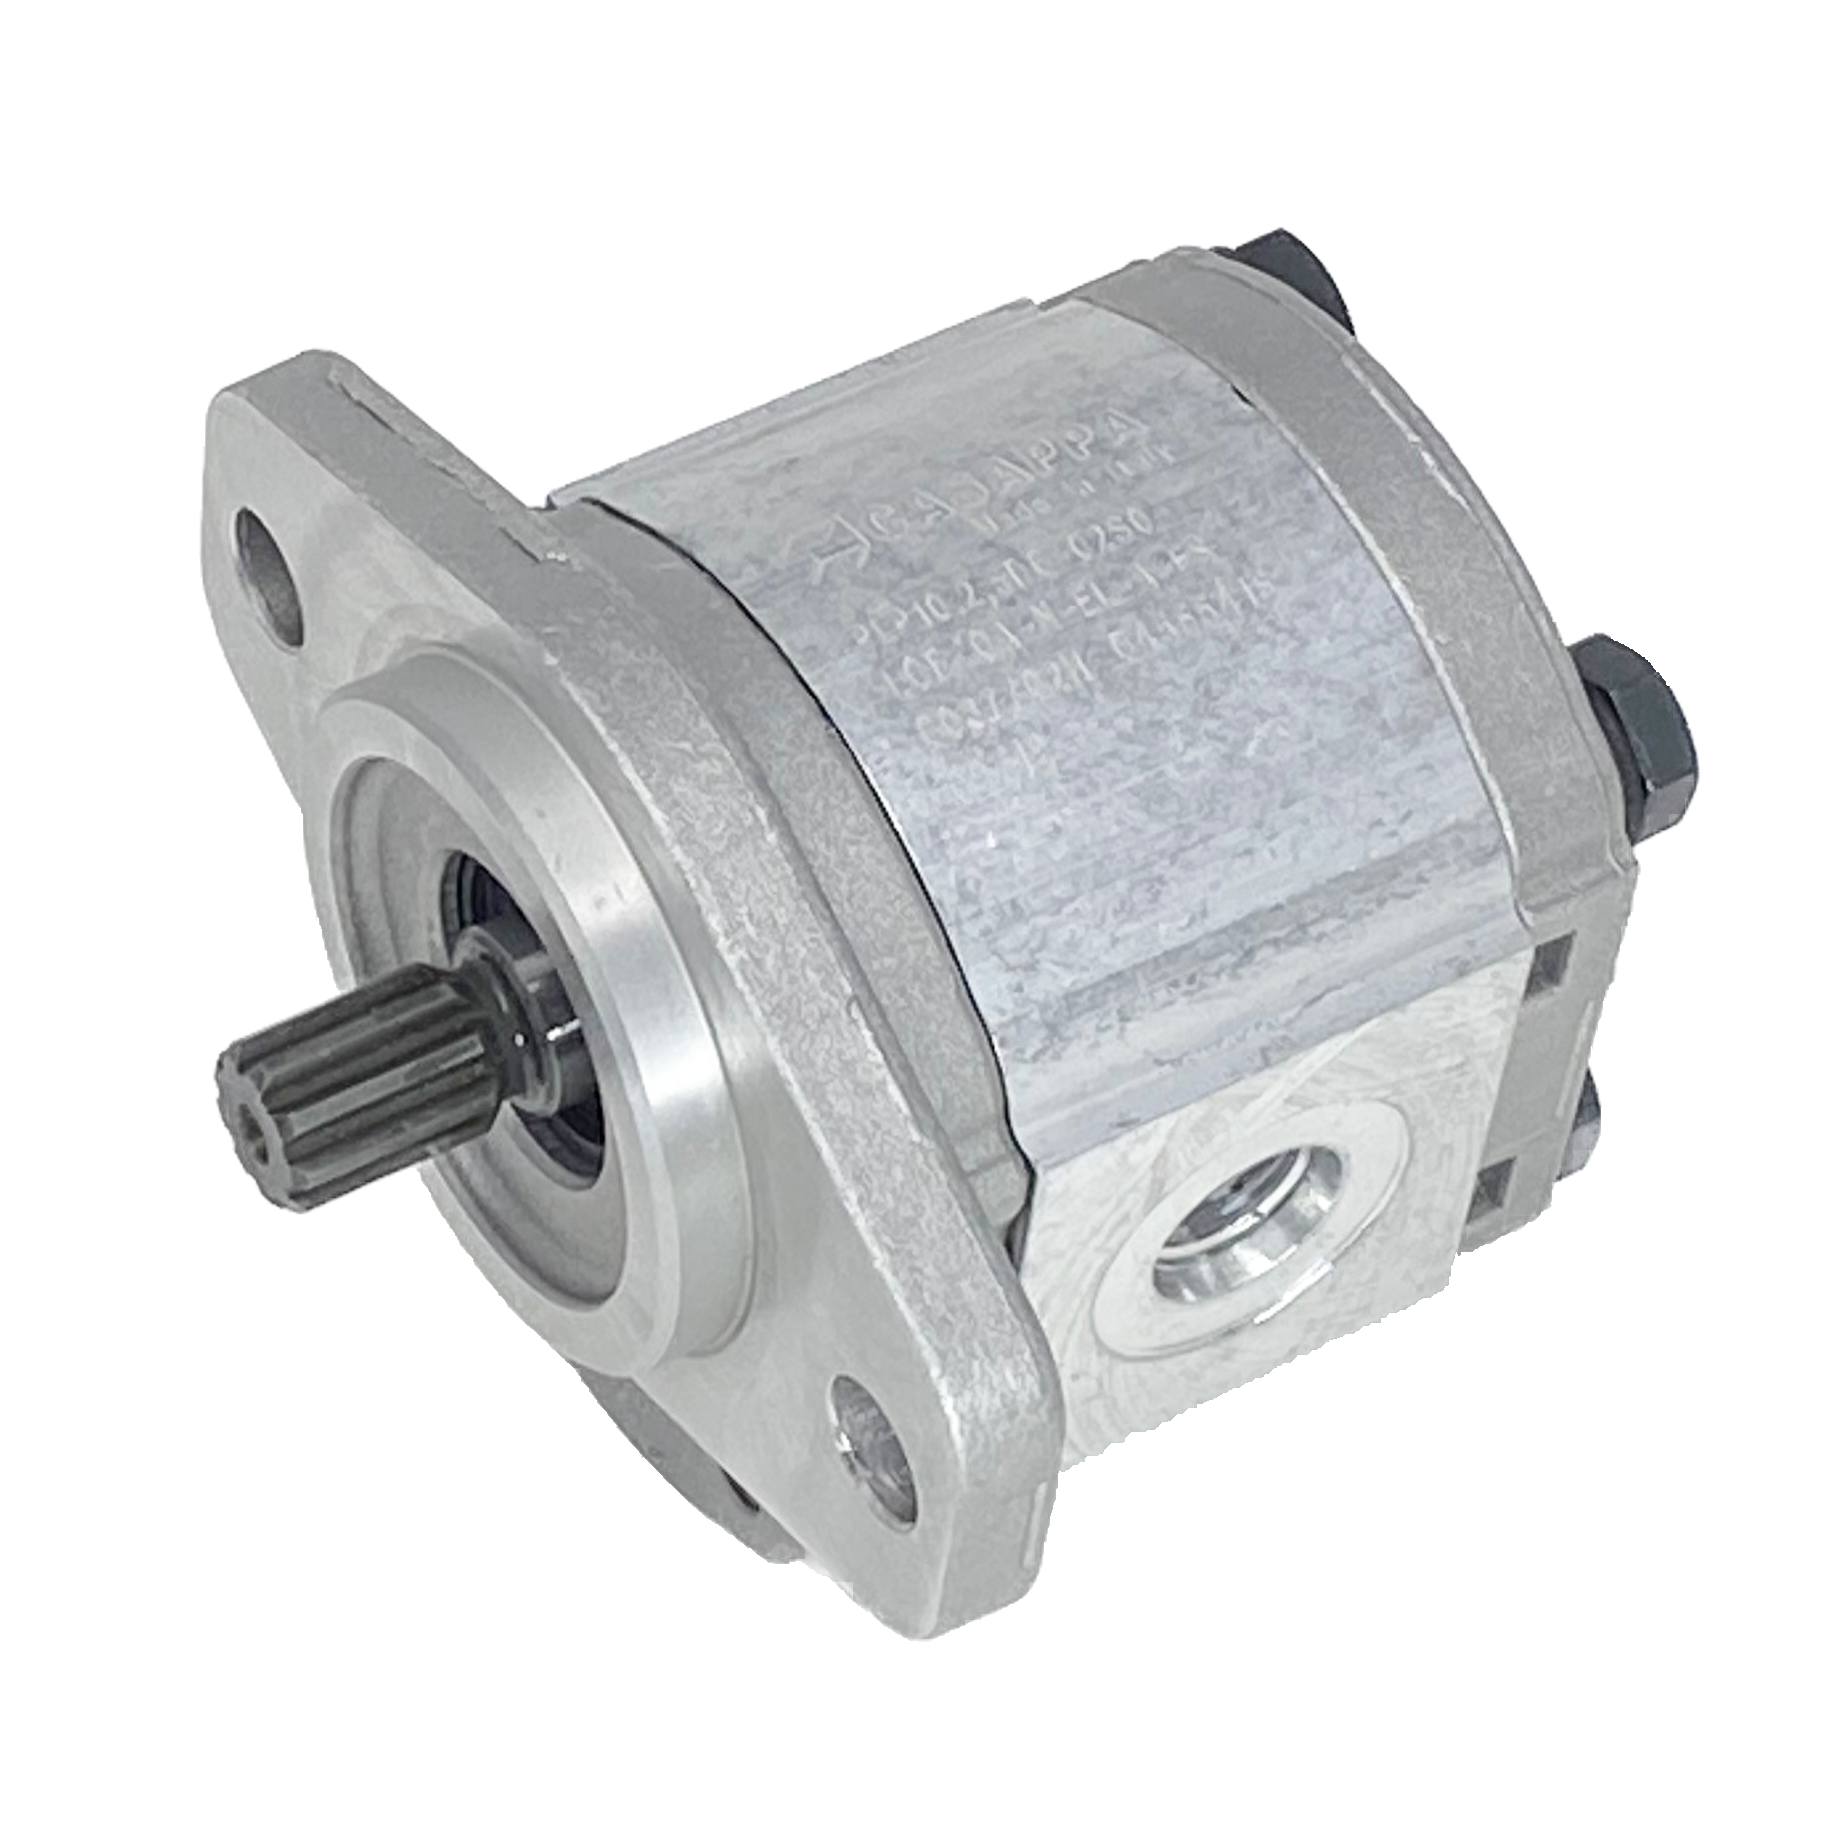 PLM10.4R0-02S0-LOA/OB-N-EL : Casappa Polaris Gear Motor, 4.27cc, 3625psi Rated, 4000RPM, Birotational Rotation, 9T 20/40dp Shaft, SAE AA 2-Bolt Flange, 0.375 (3/8") #6 SAE Inlet, 0.5 (1/2") #8 SAE Outlet, Aluminum Body & Flange